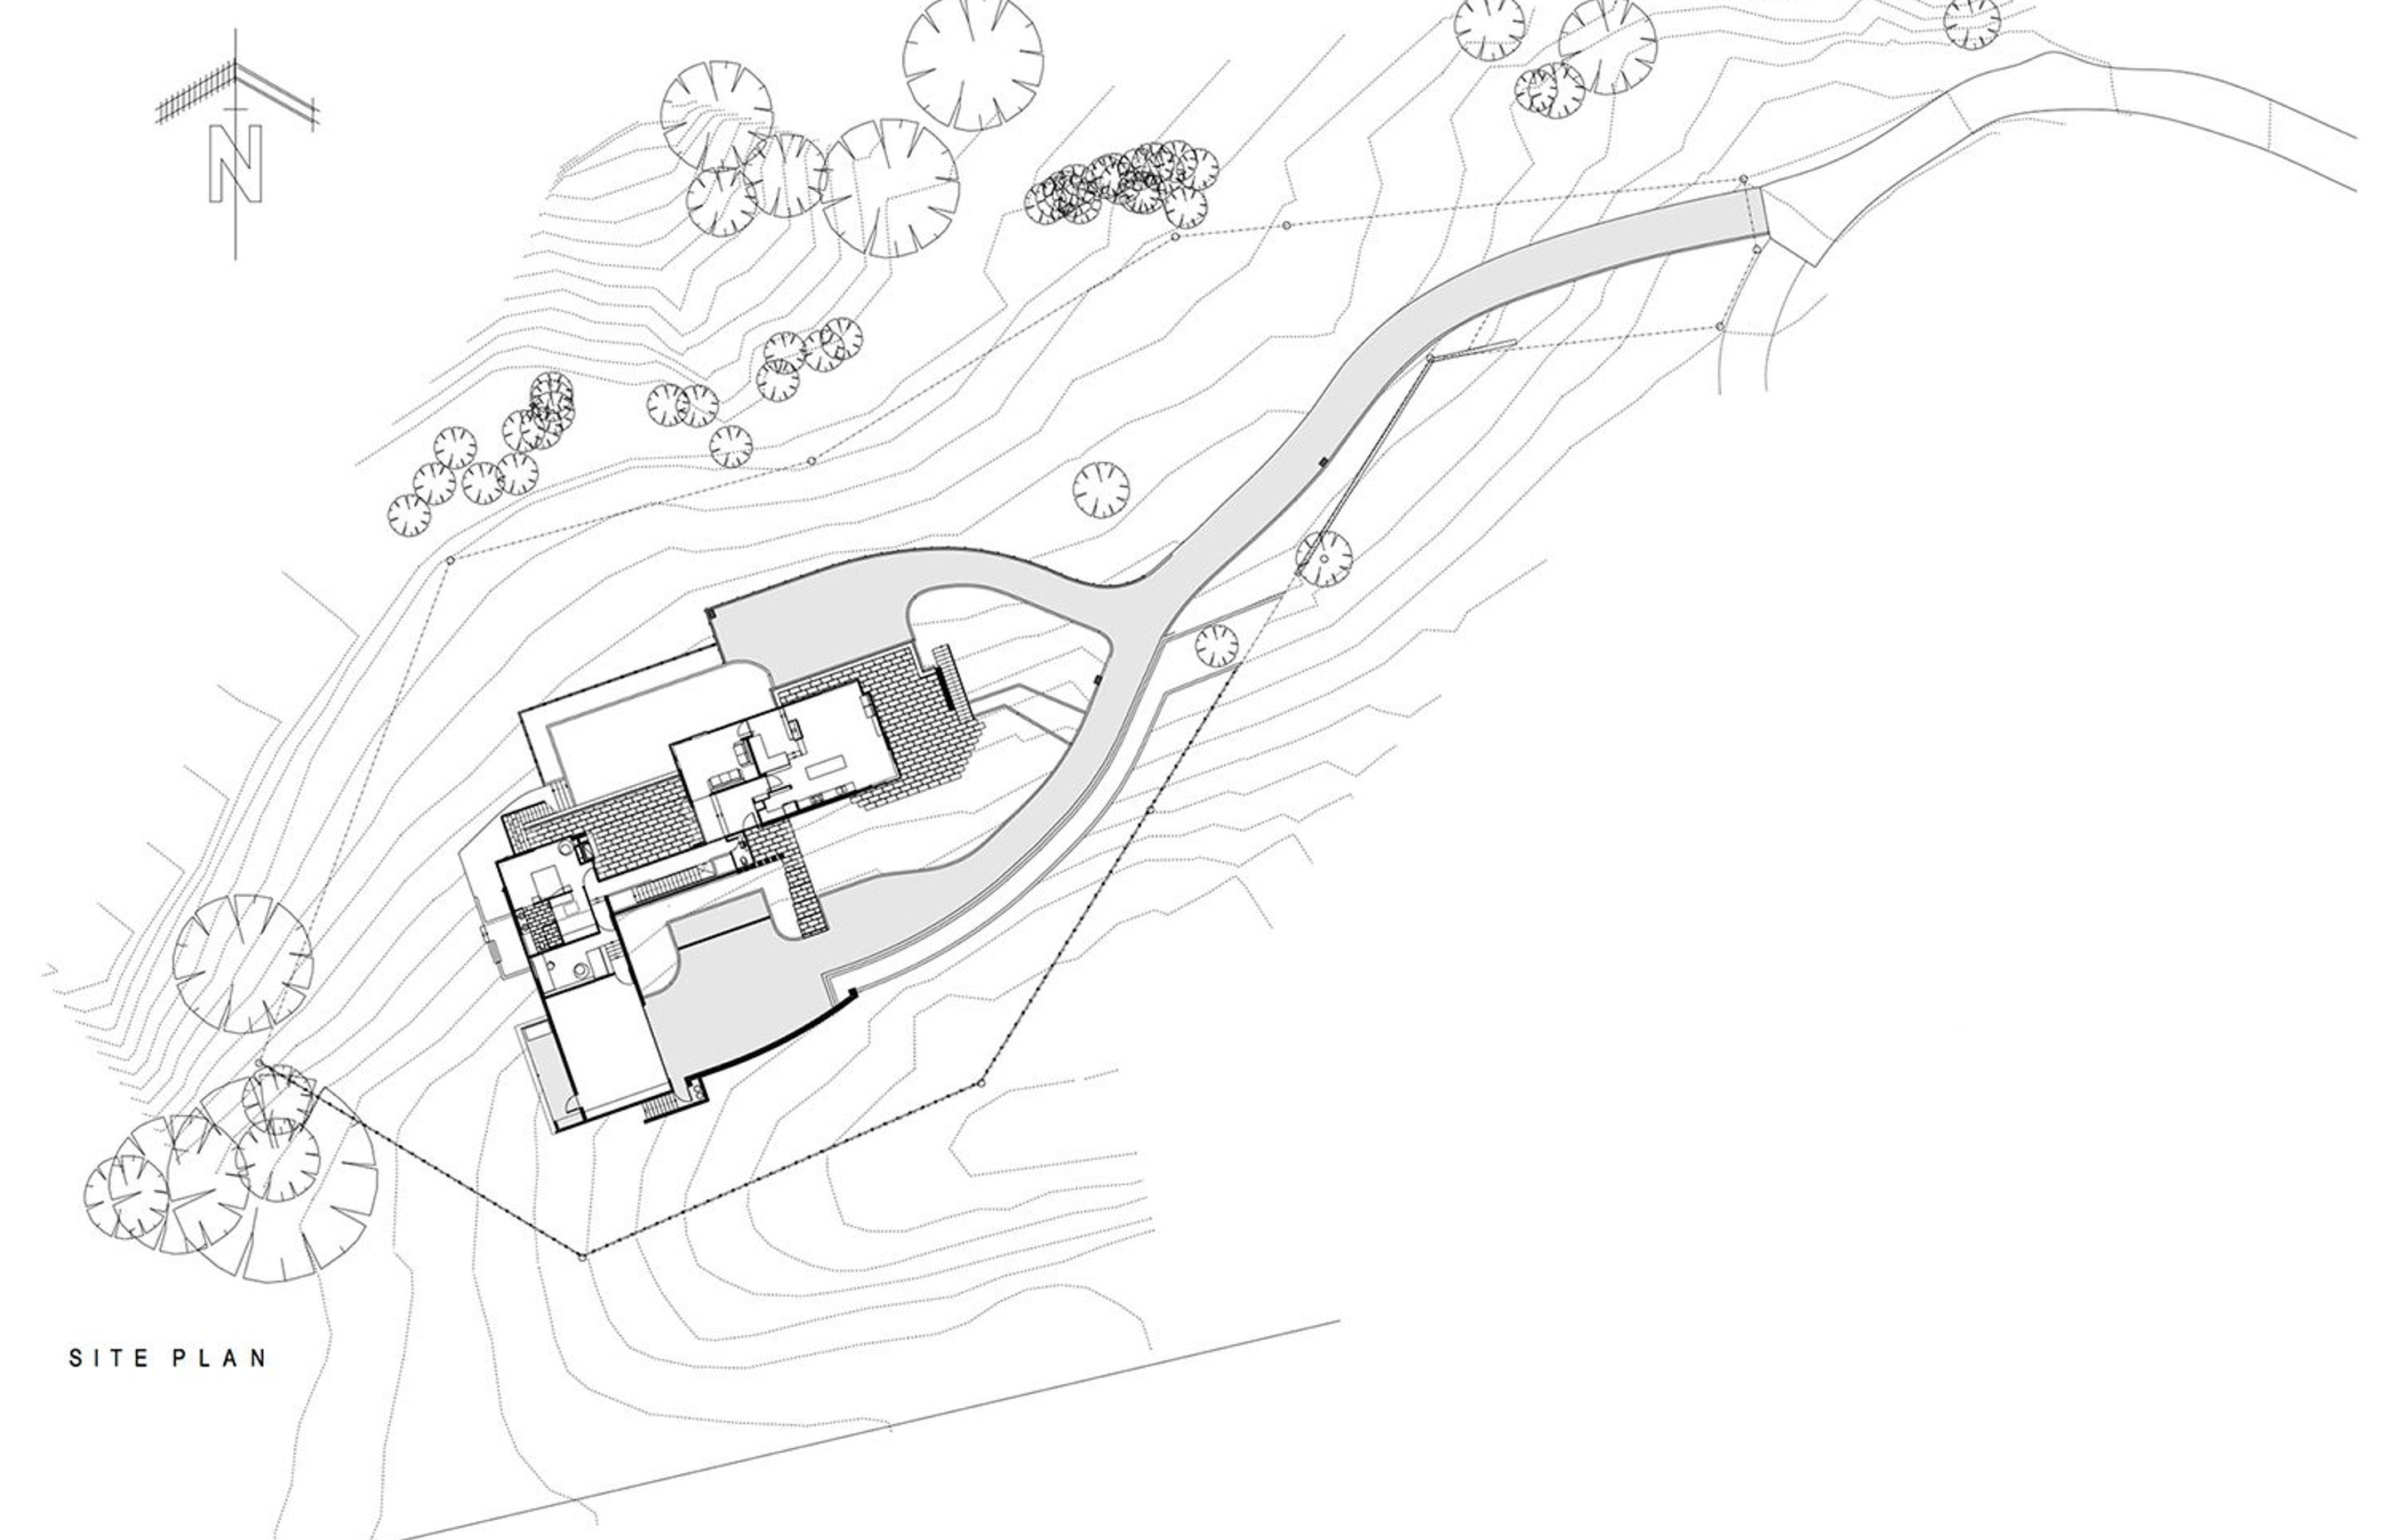 Site plan by Megan Edwards Architects.